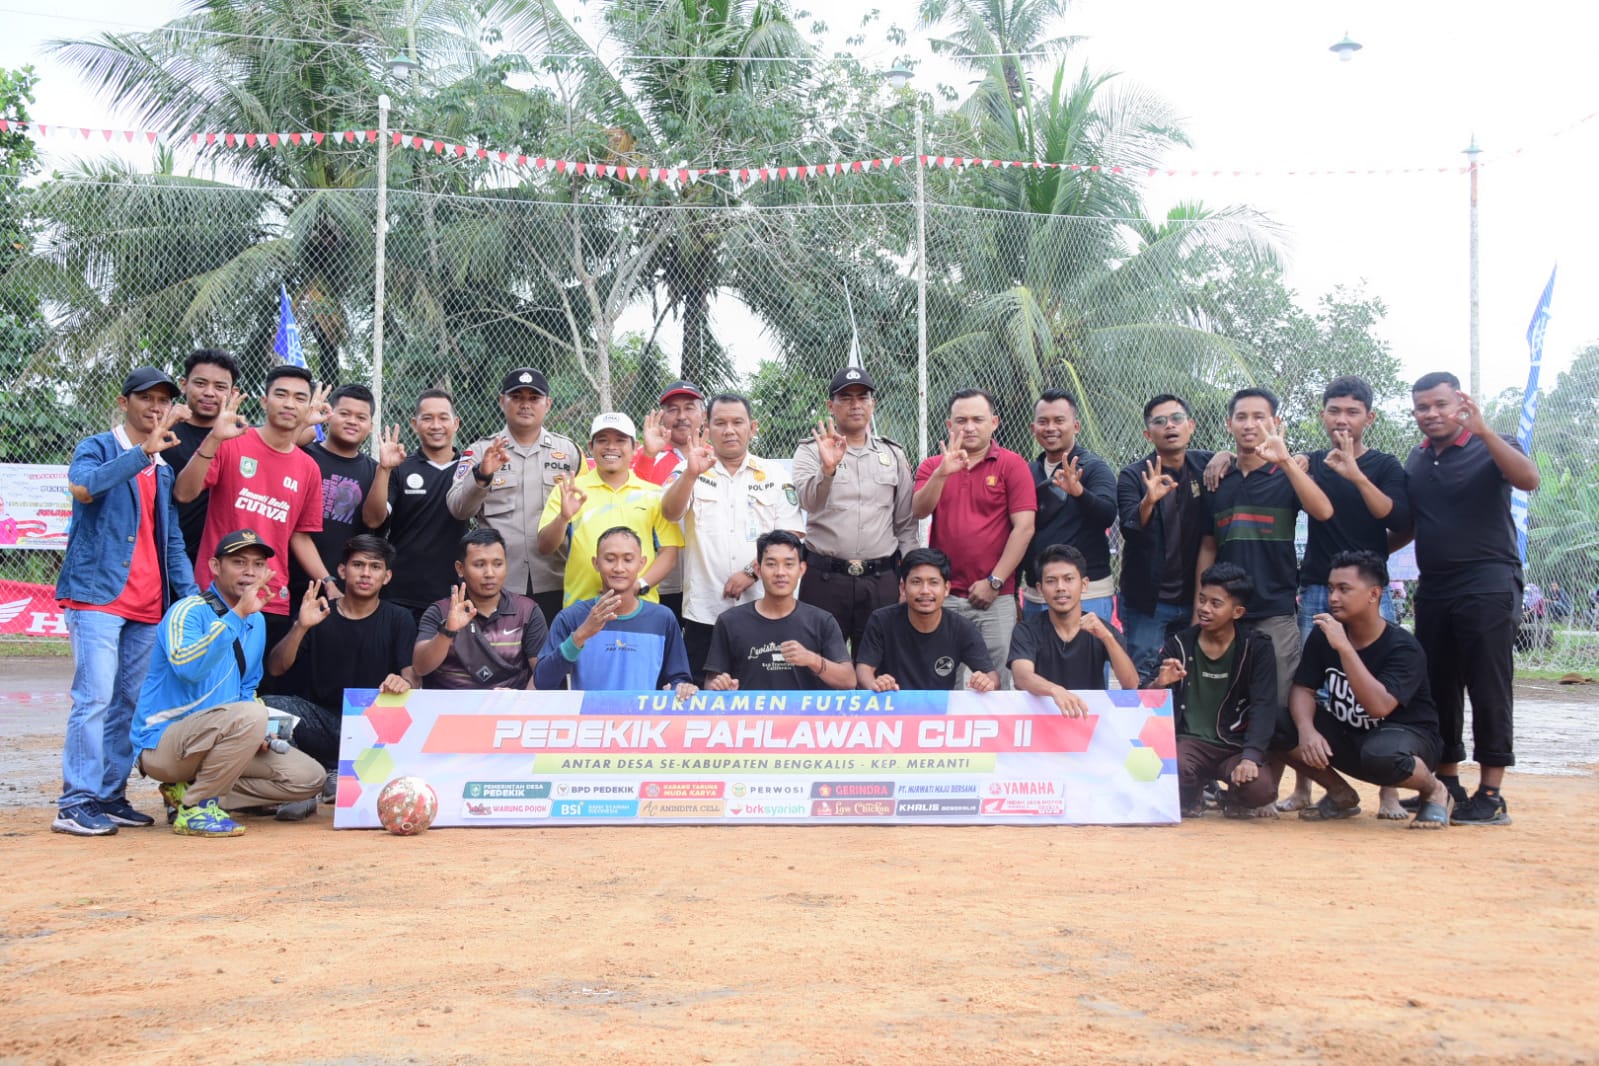 Alhamdulillah Turnamen Futsal Pedekik Pahlawan Cup II, Antar Desa se-Kabupaten Bengkalis Resmi Dimulai